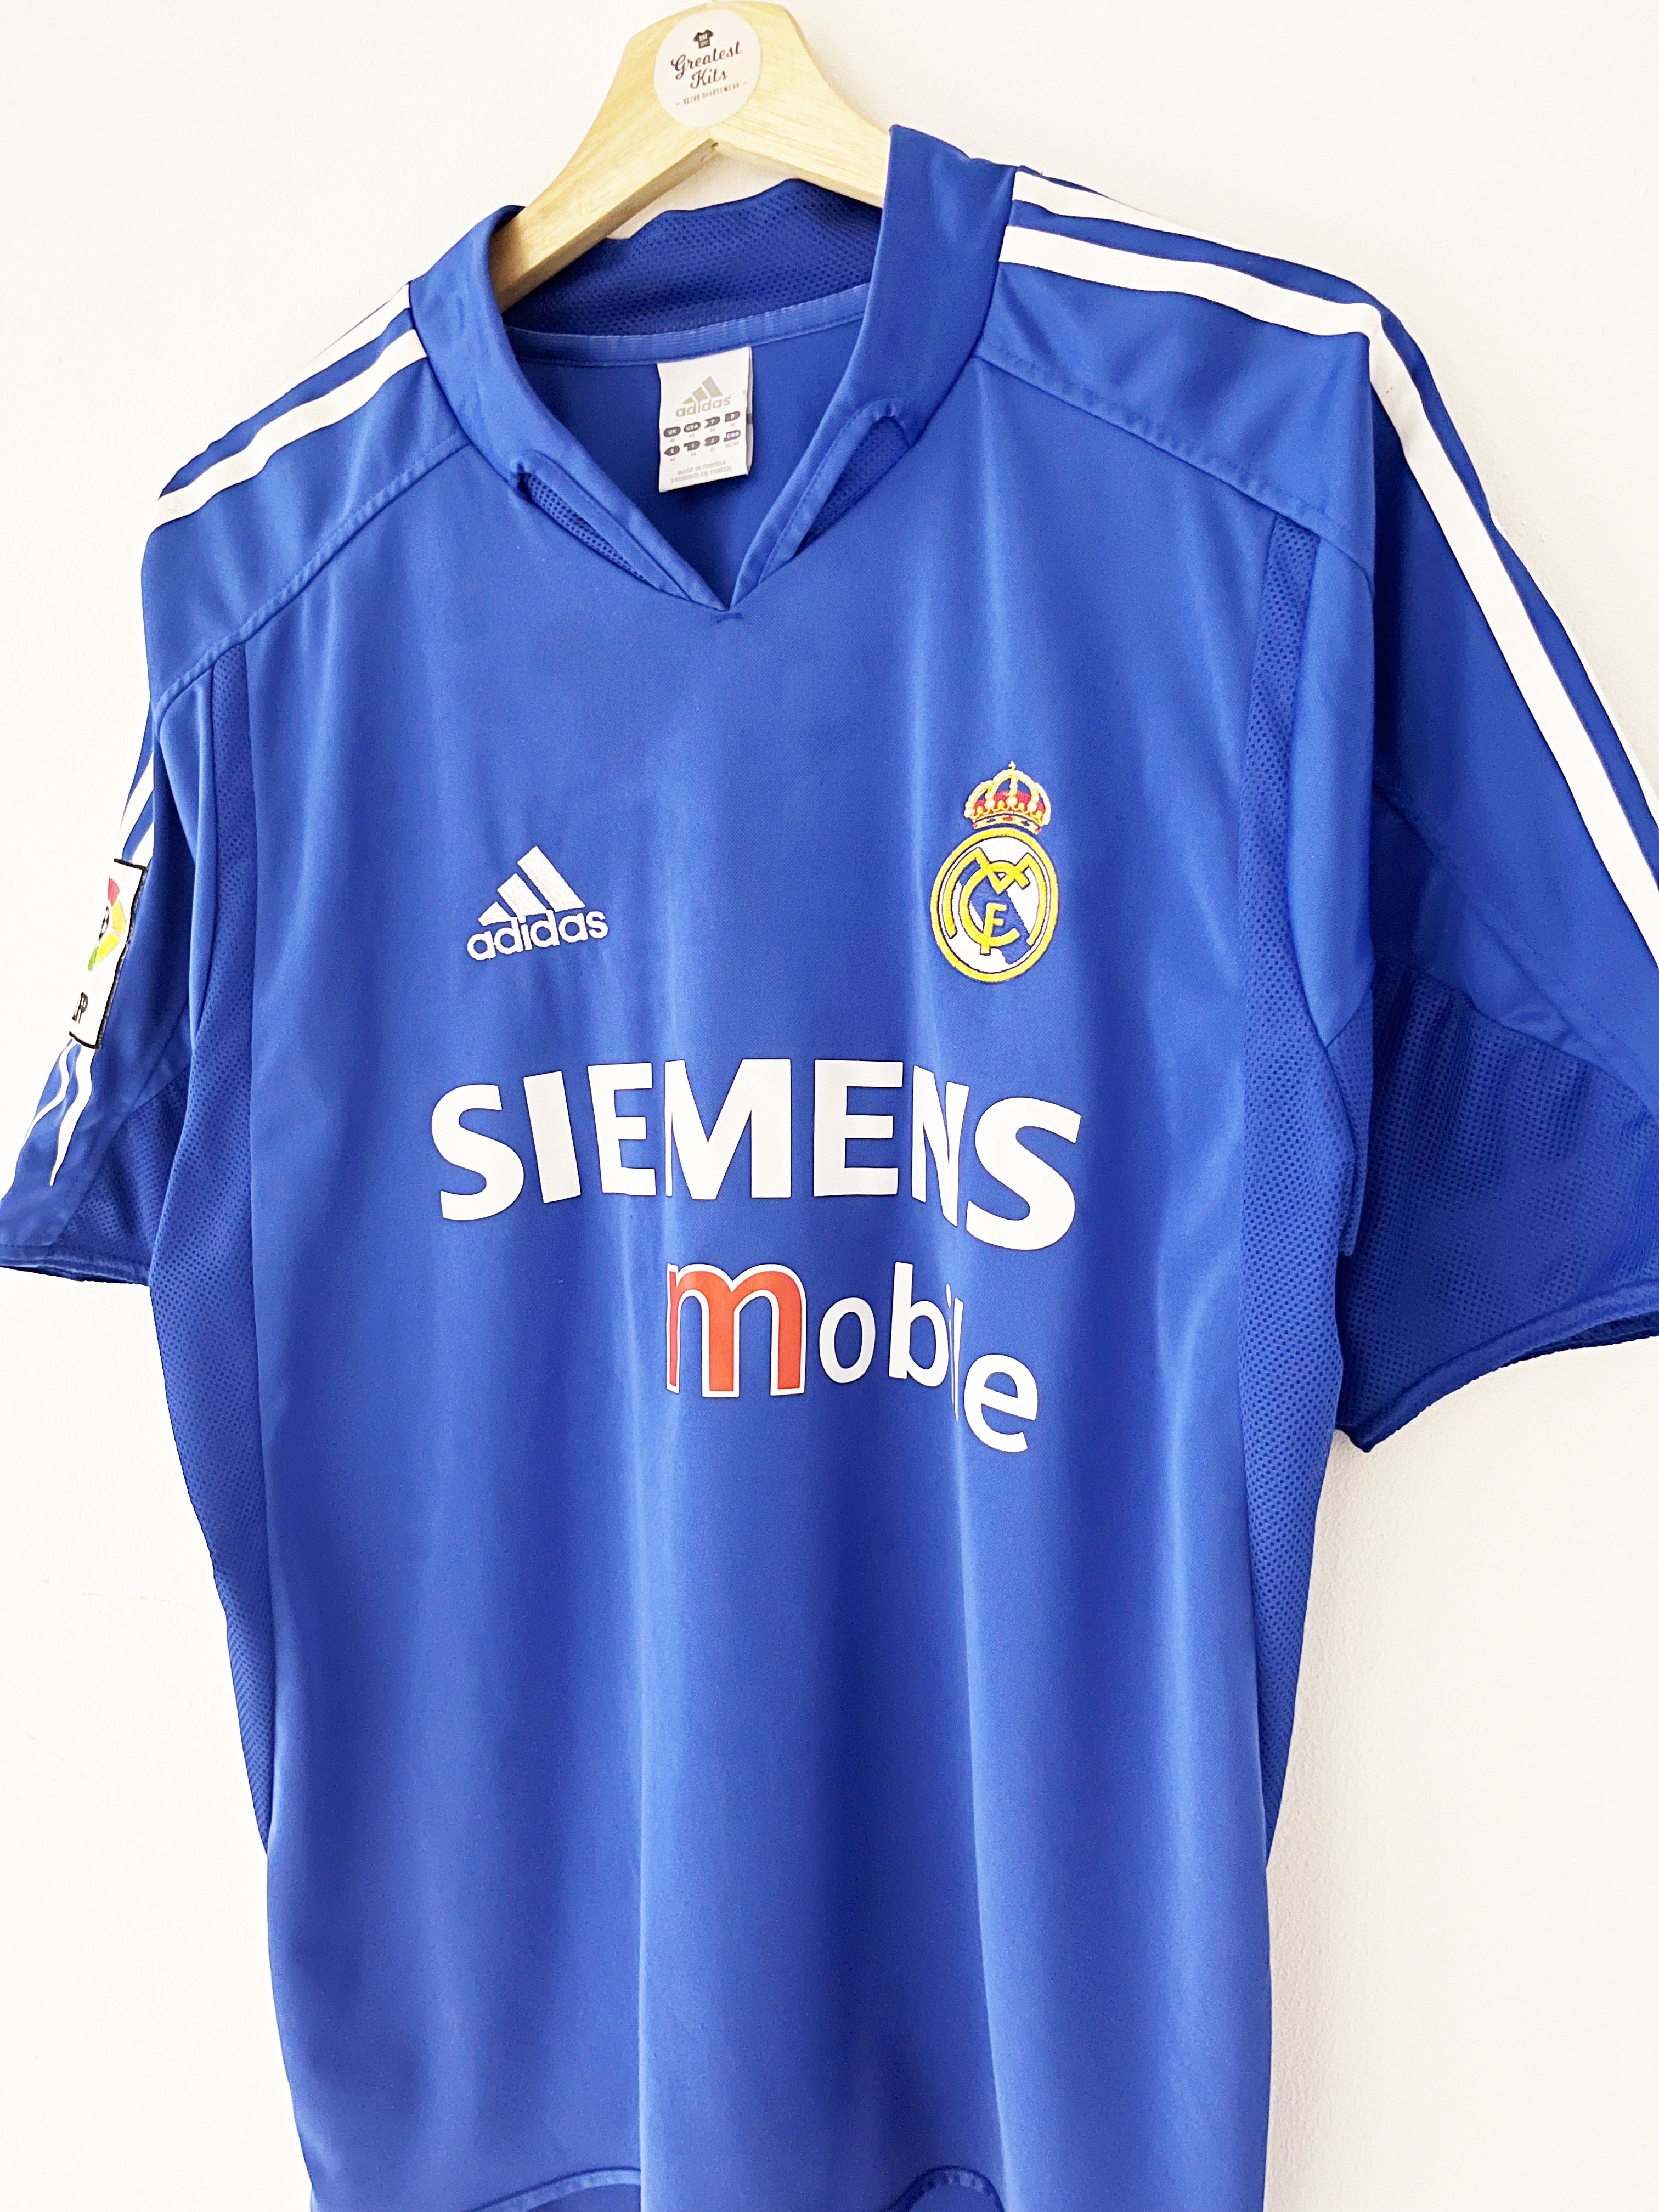 2004/05 Tercera camiseta del Real Madrid (M) 8.5/10